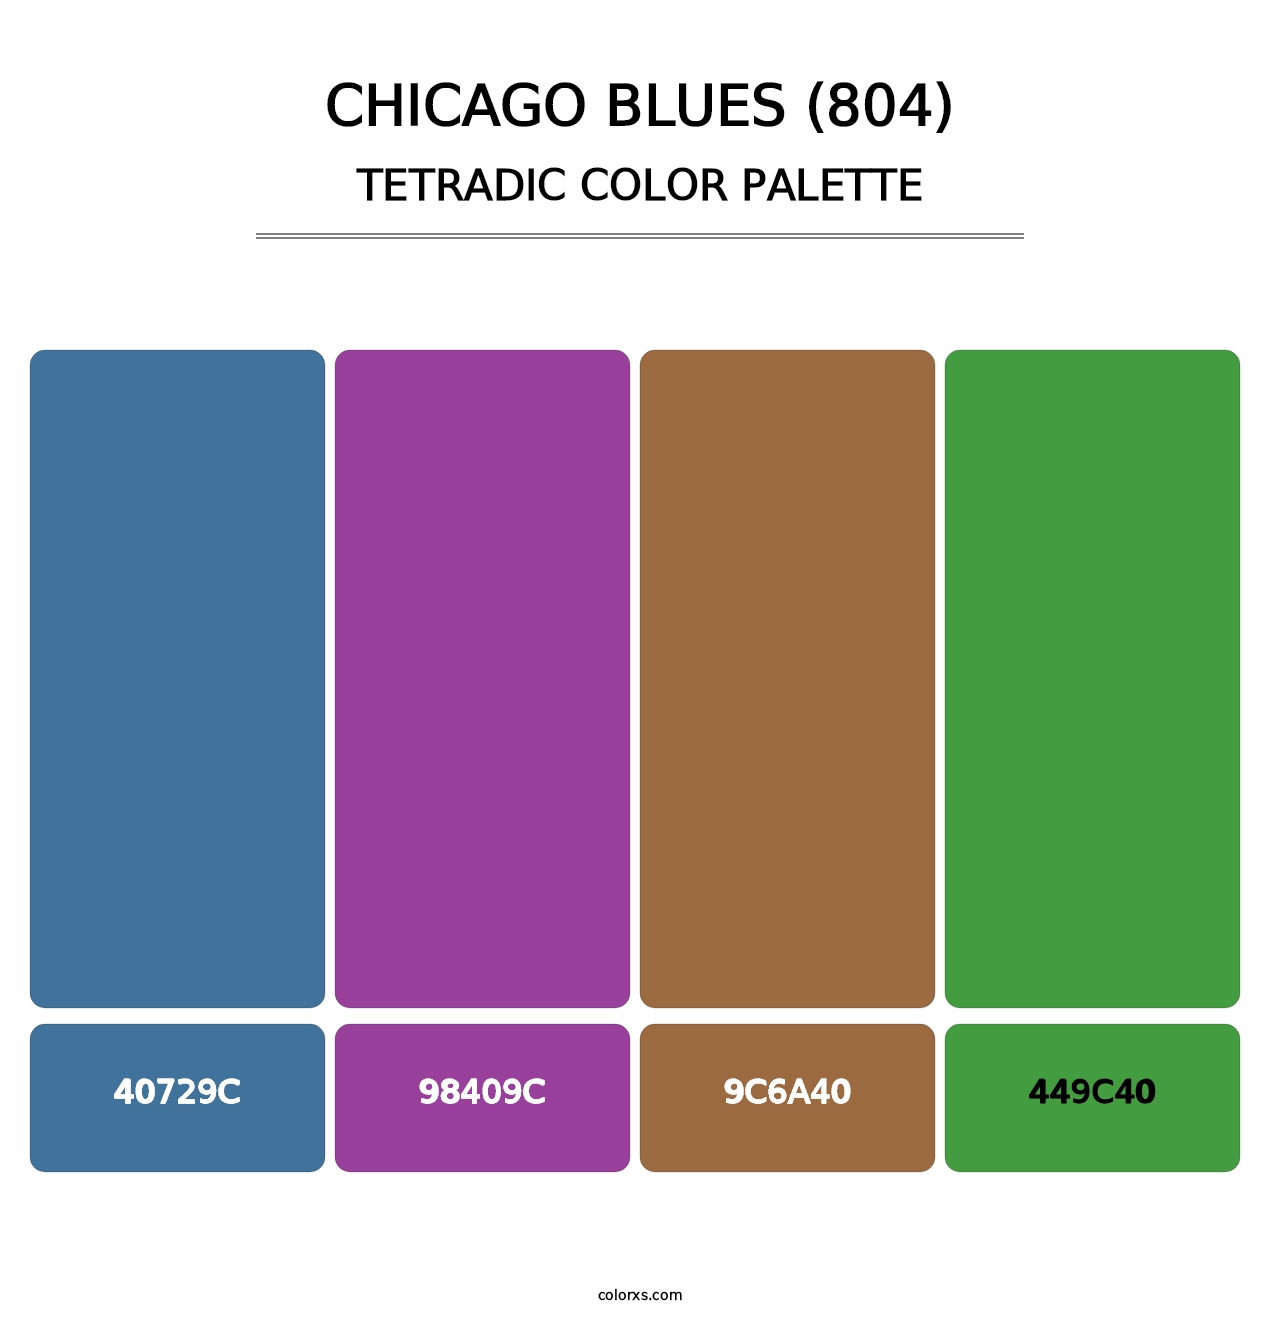 Chicago Blues (804) - Tetradic Color Palette